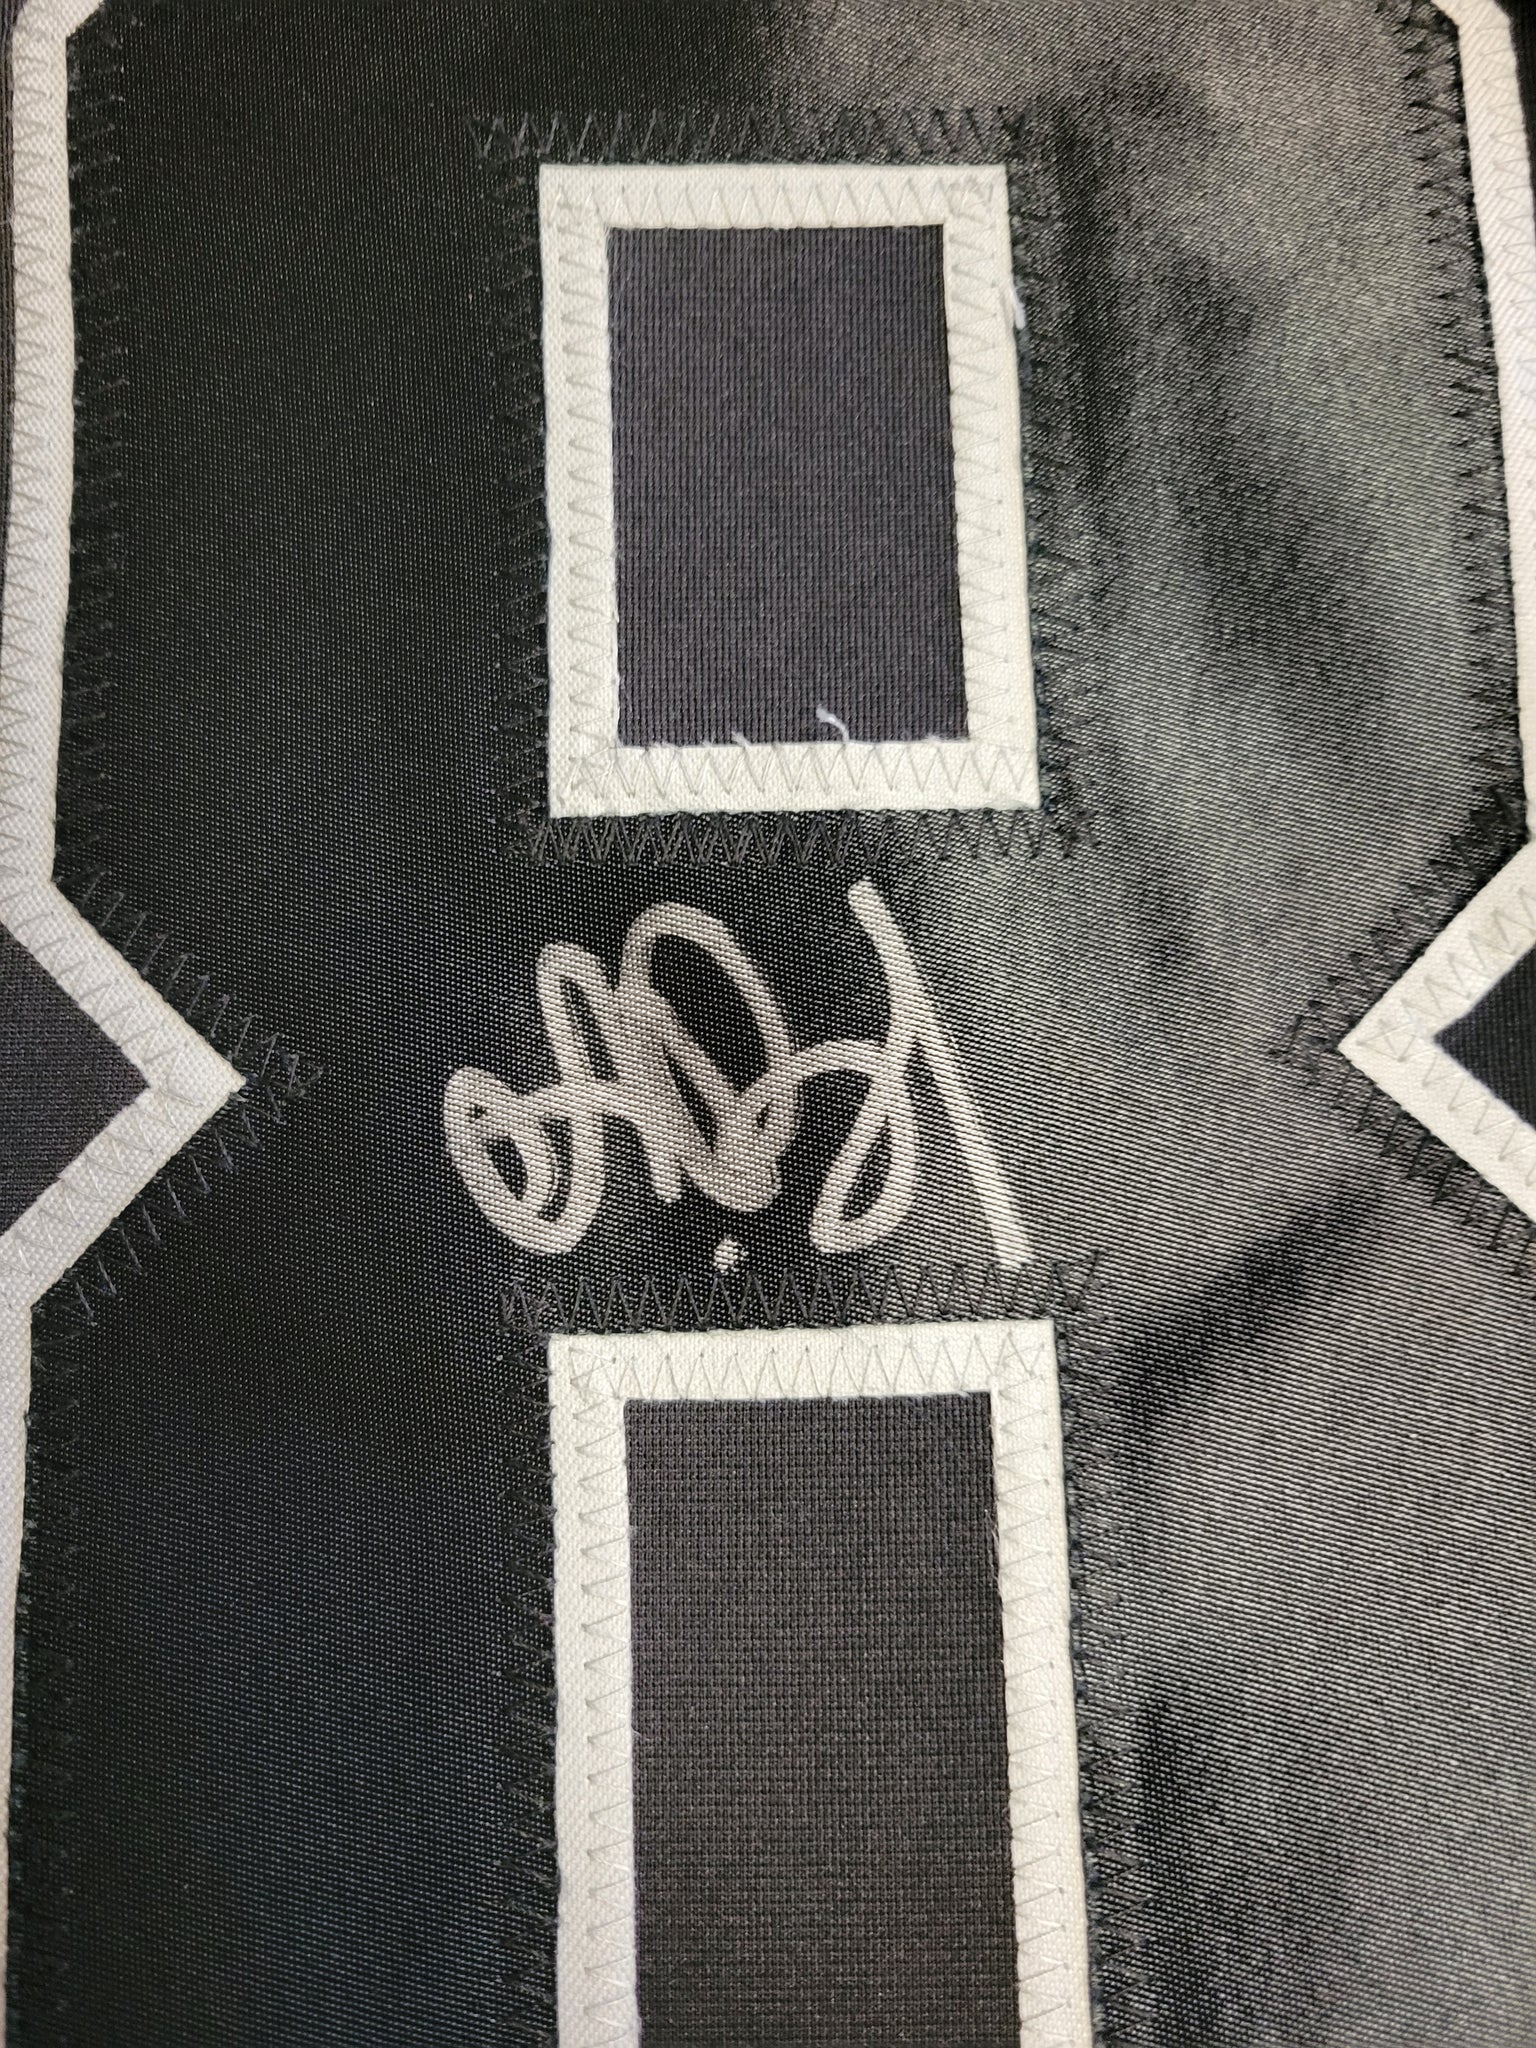 Andrei Vasilevskiy Authentic Signed Pro Style Jersey Autographed JSA